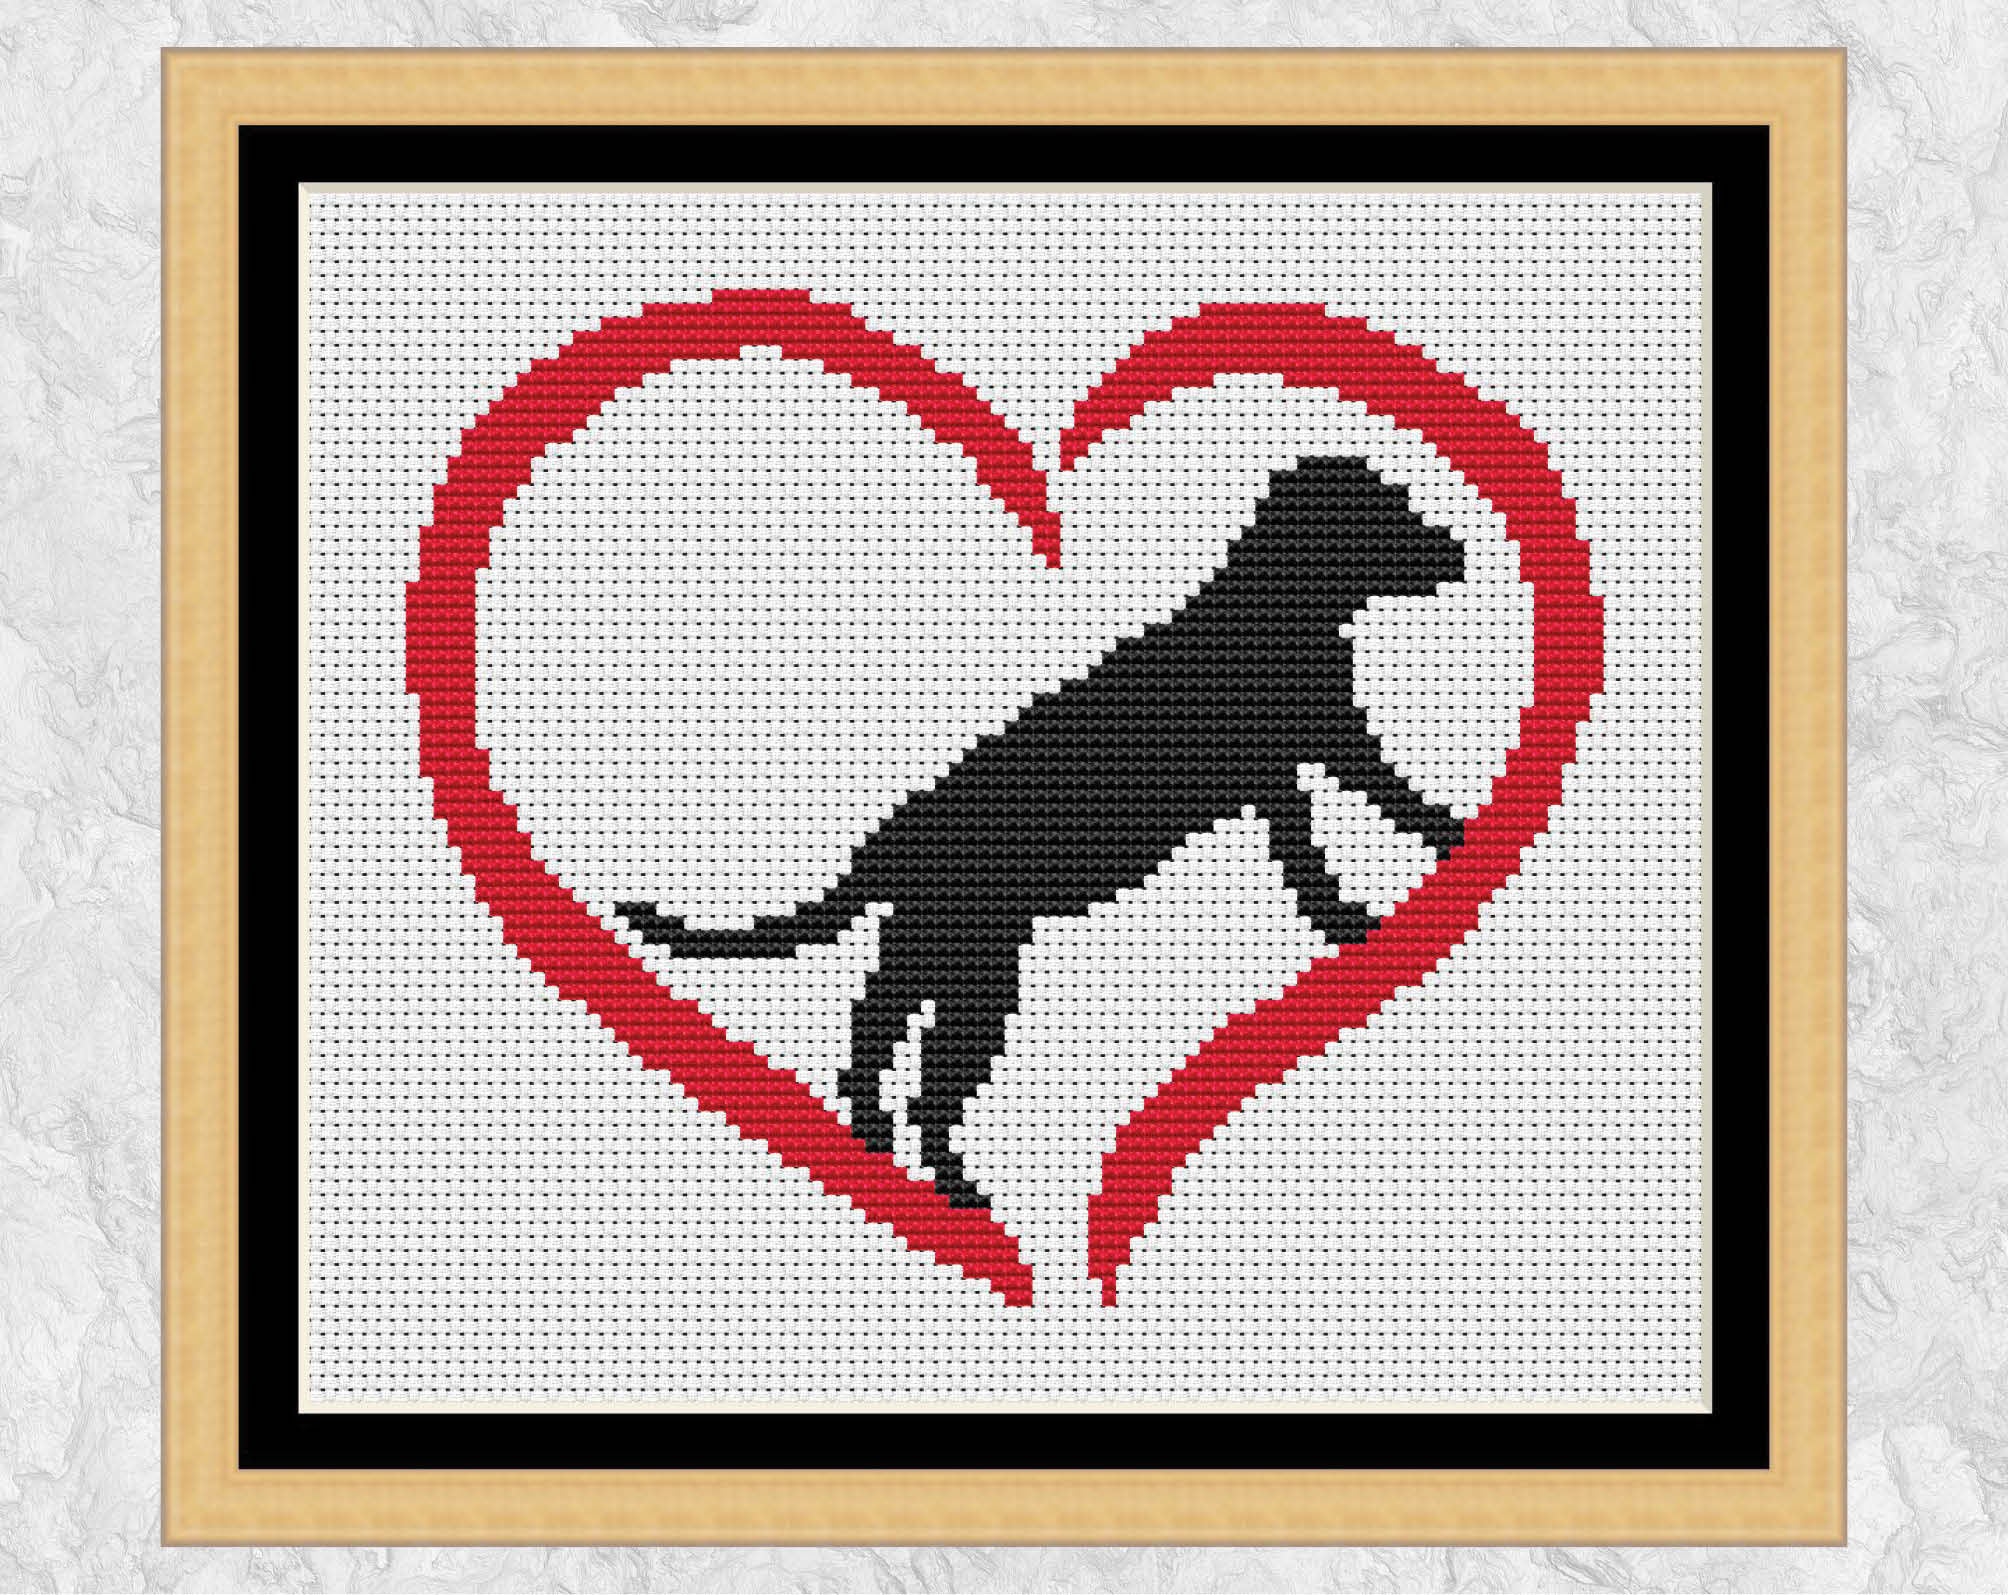 Dog Heart cross stitch pattern with frame